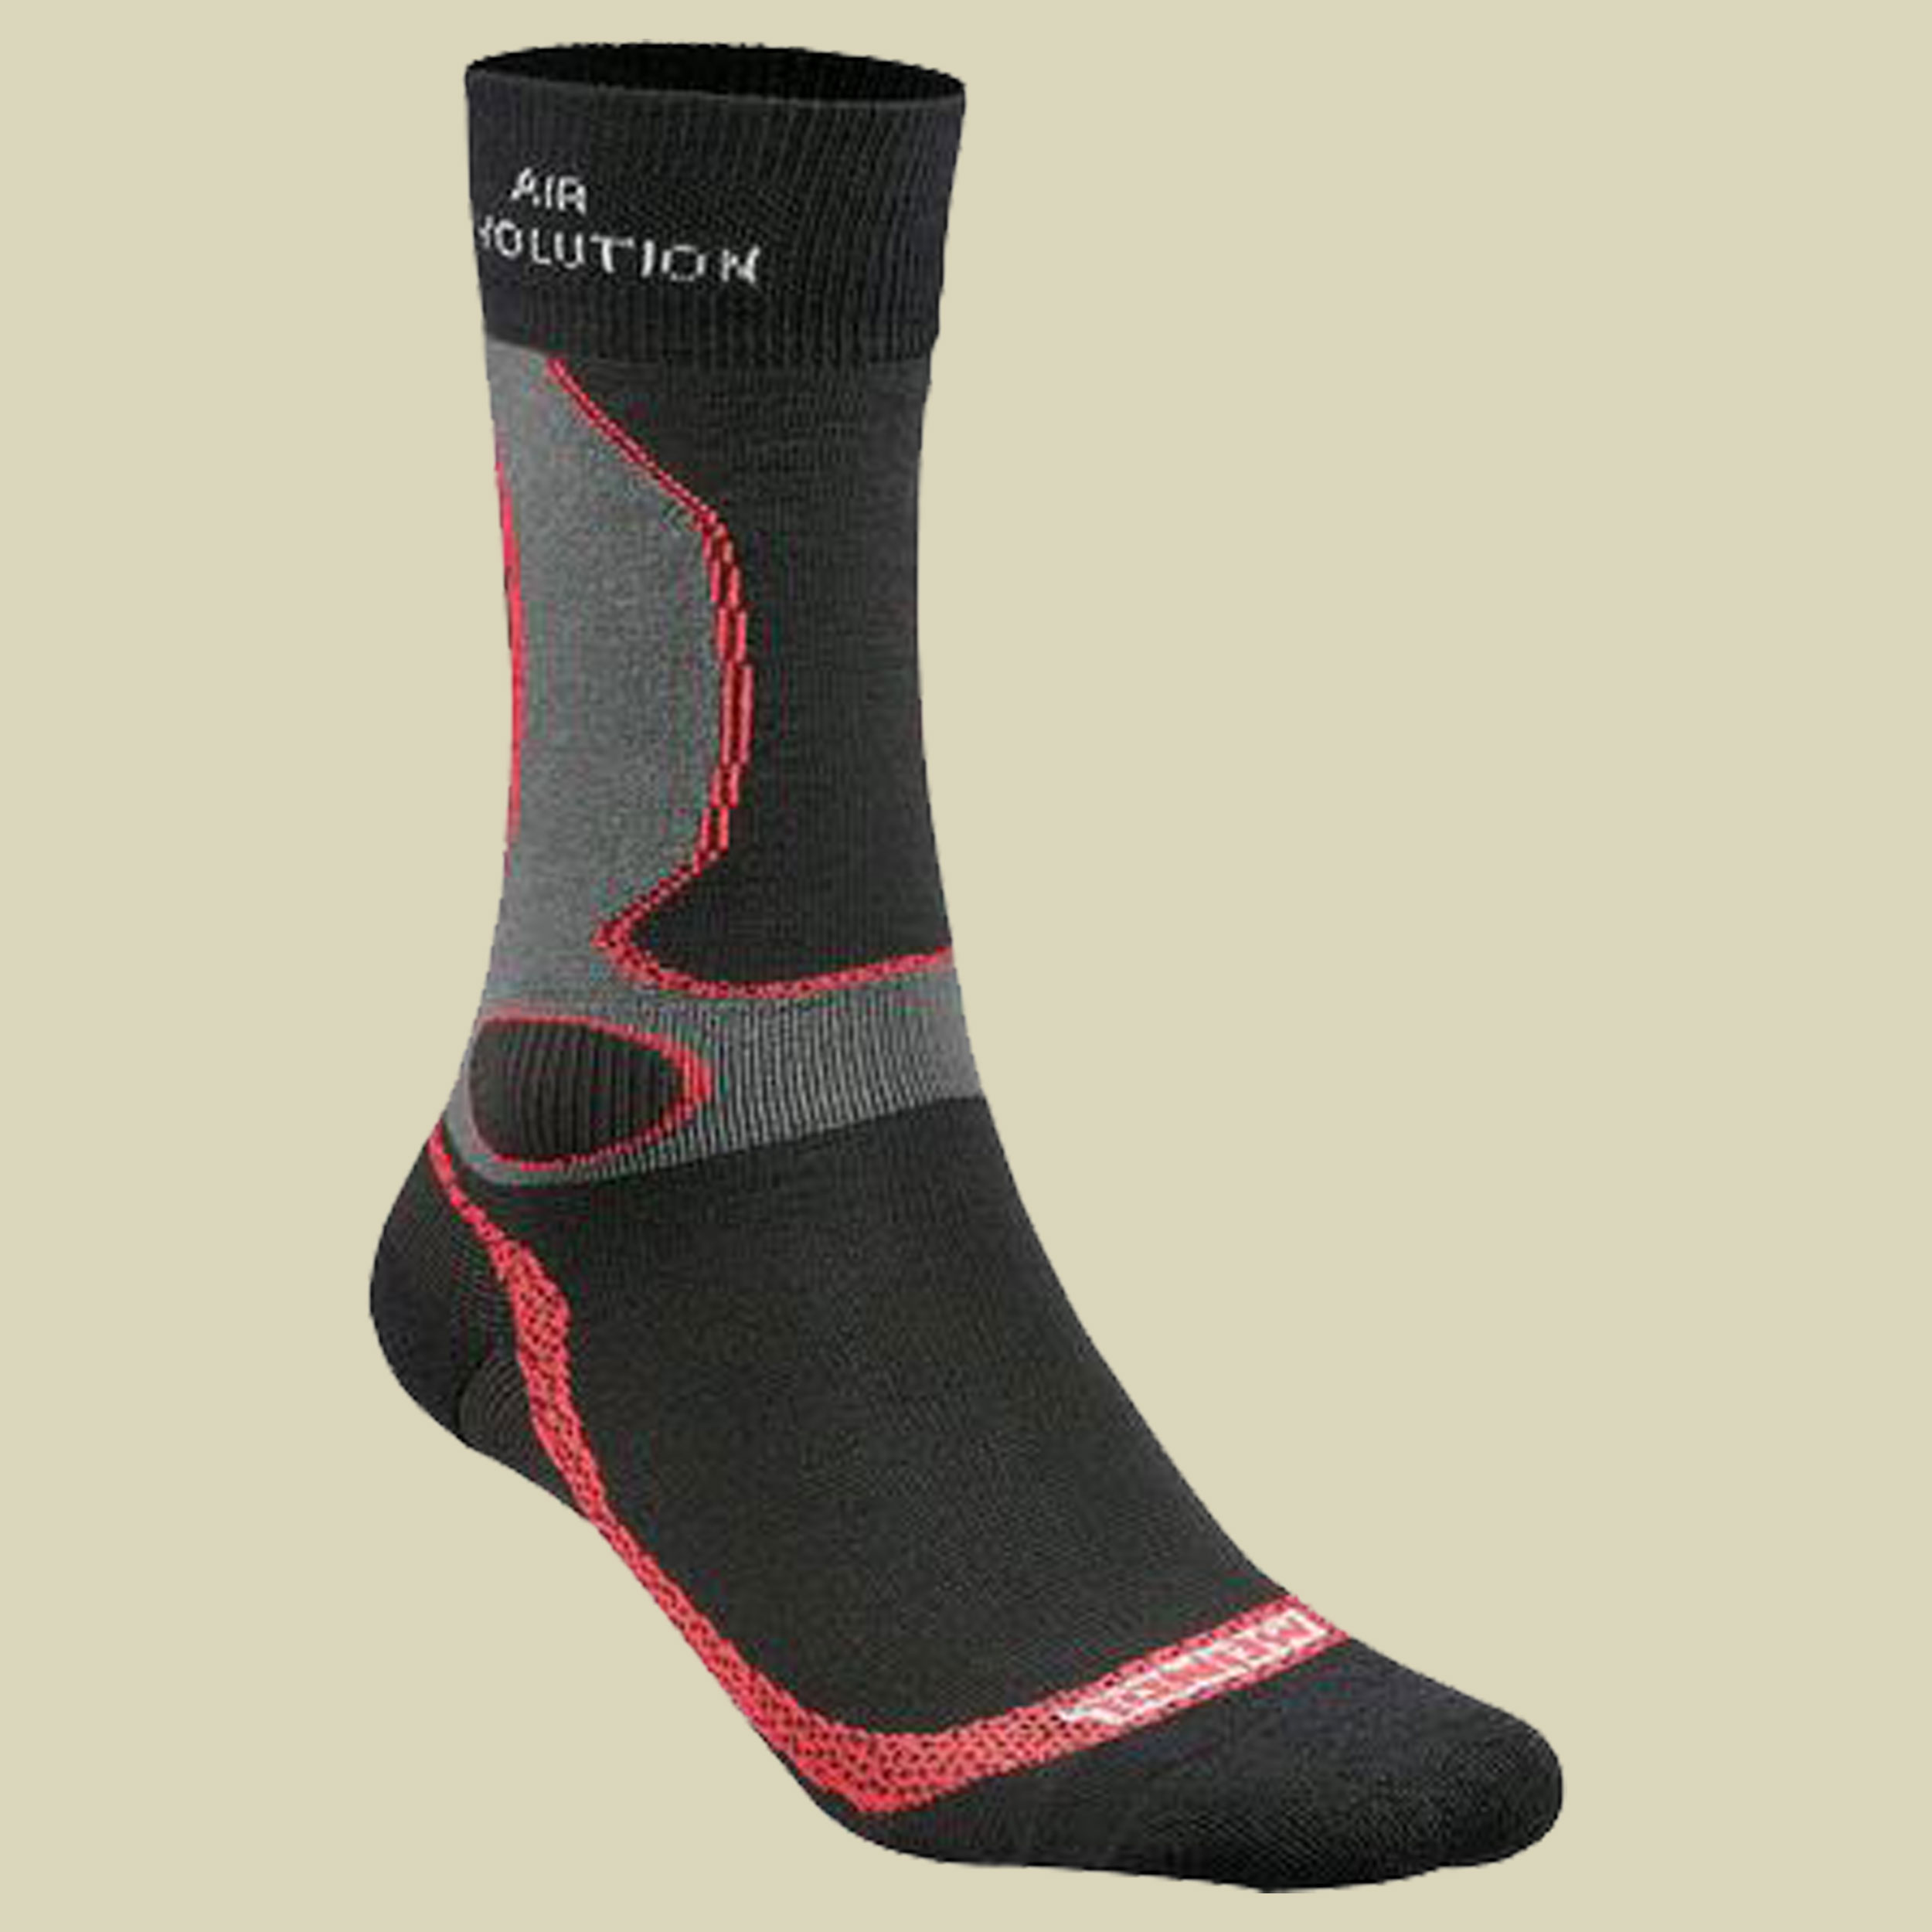 Revolution Sock Dry Größe 40-43 Farbe schwarz-silber